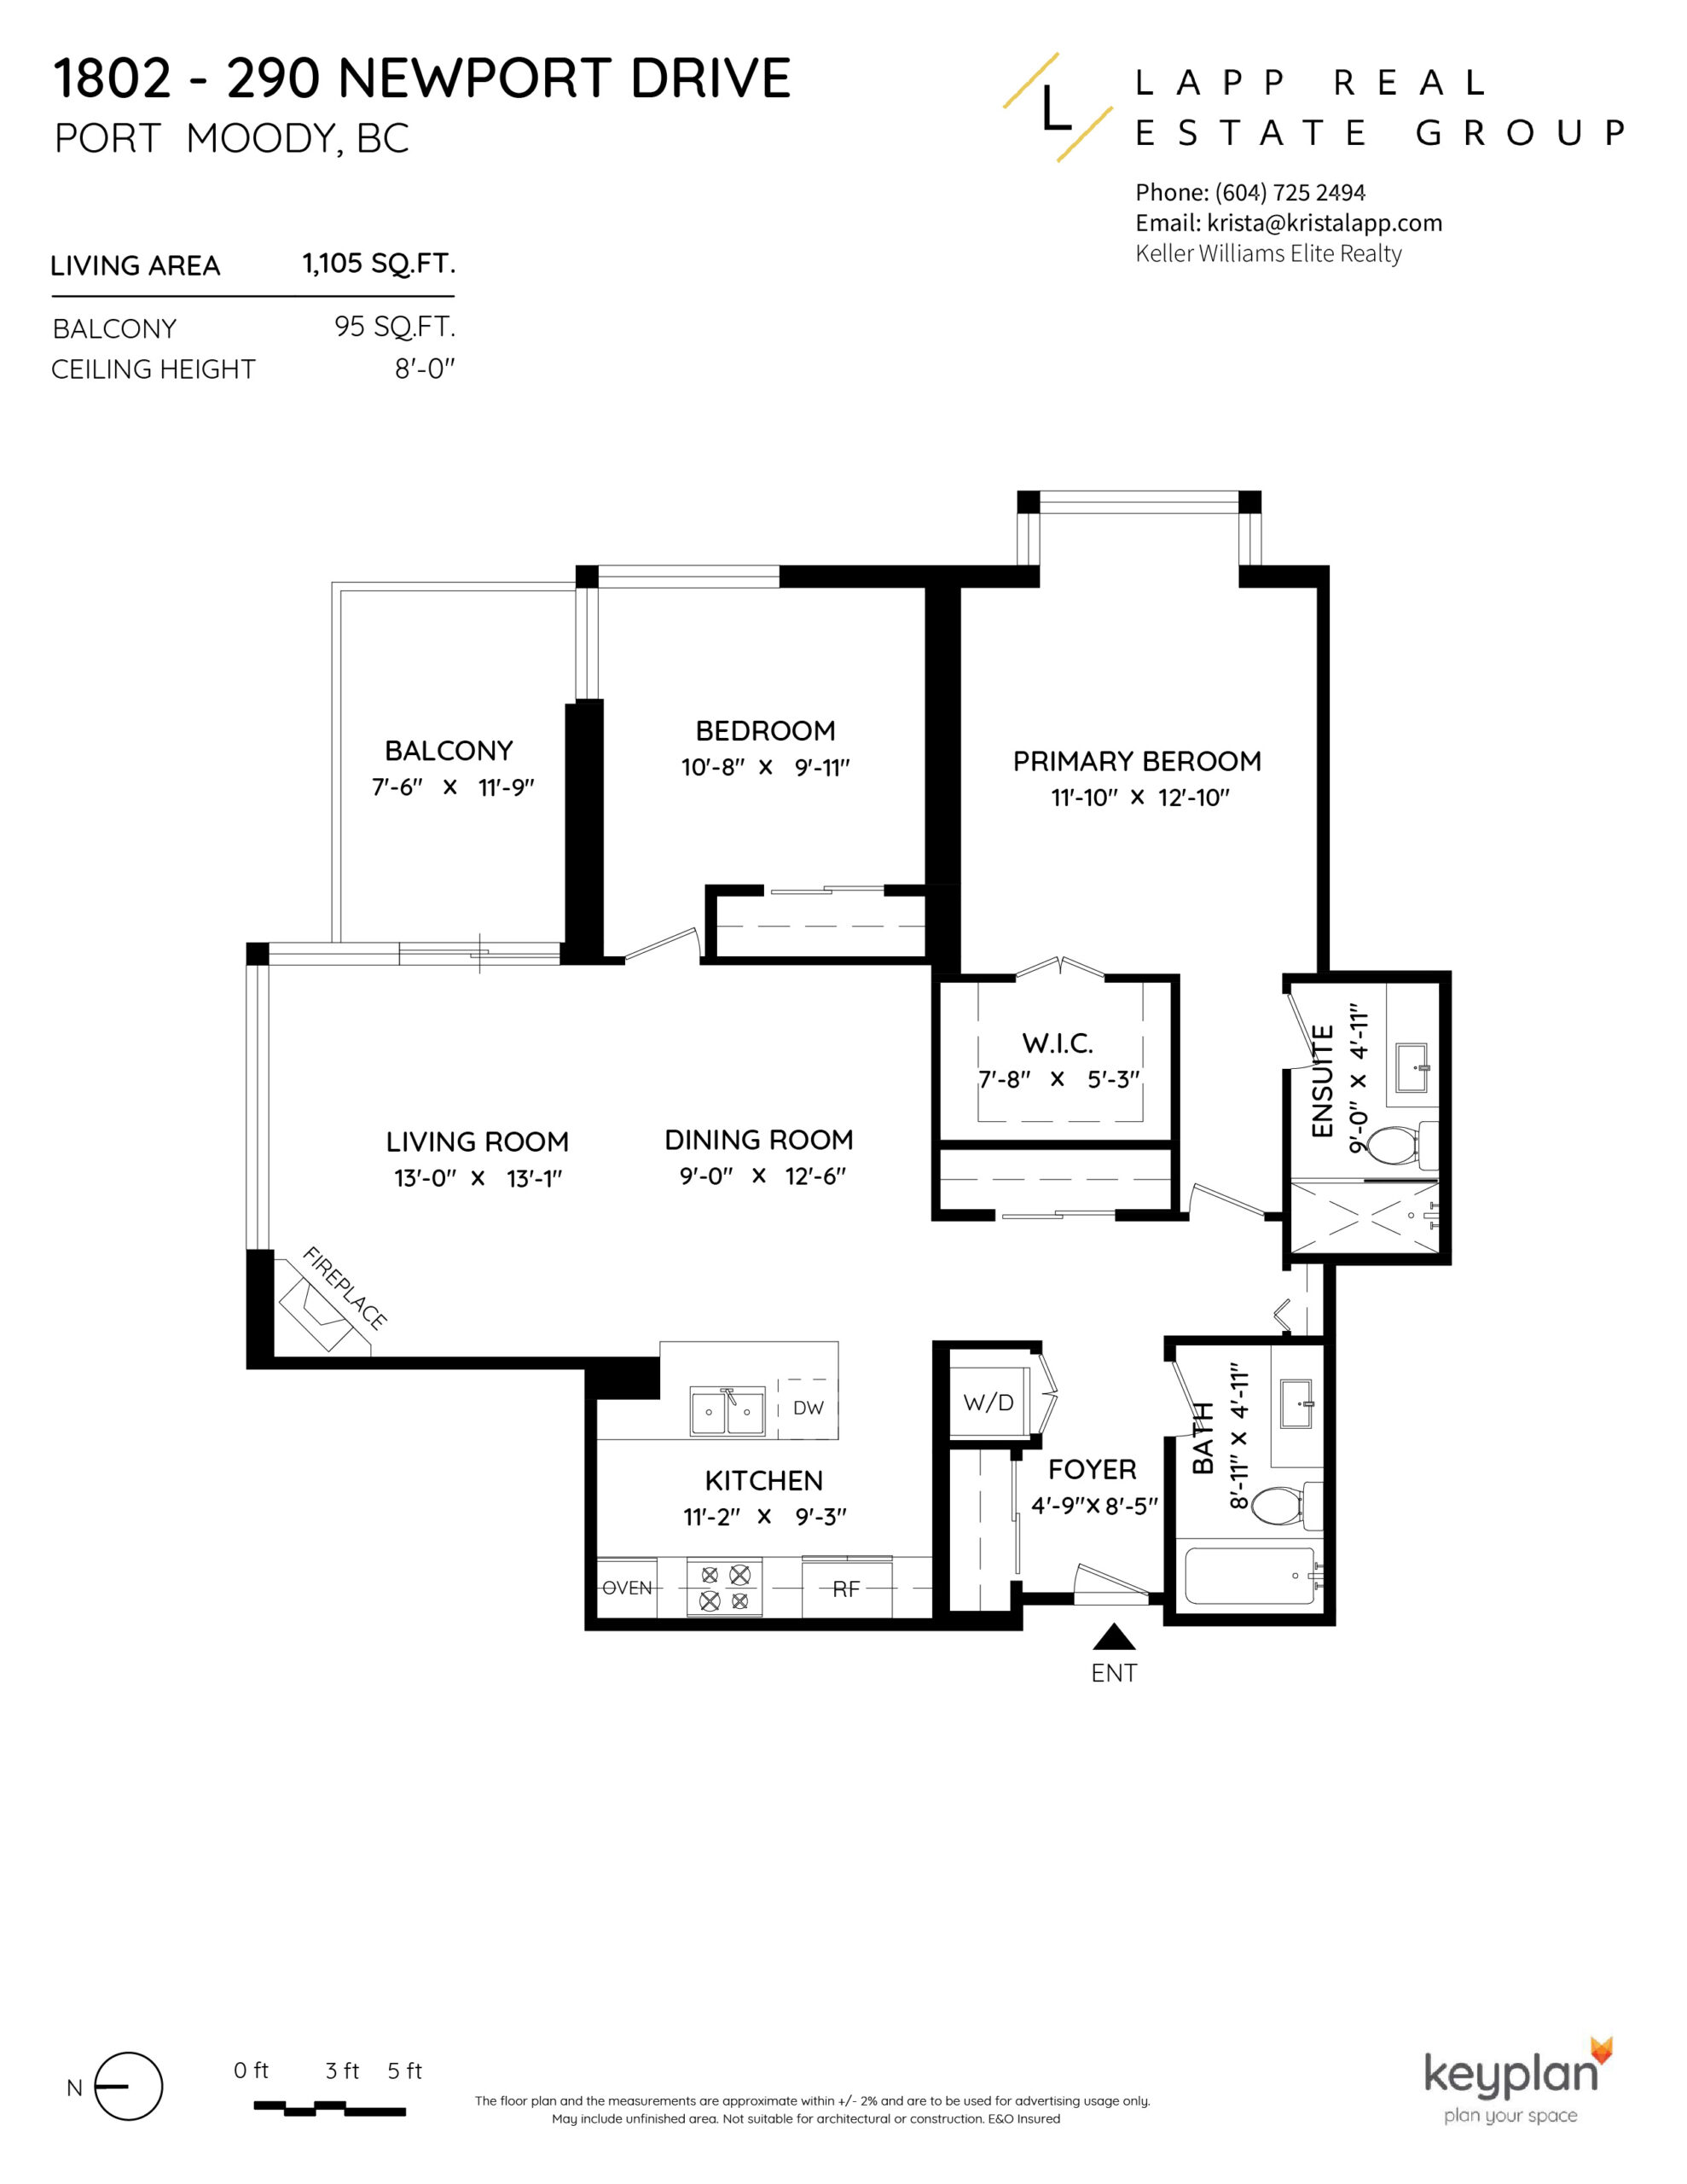 Krista Lapp Unit 1802 290 Newport Dr Port Moody Condo Floorplan-Layout2-01